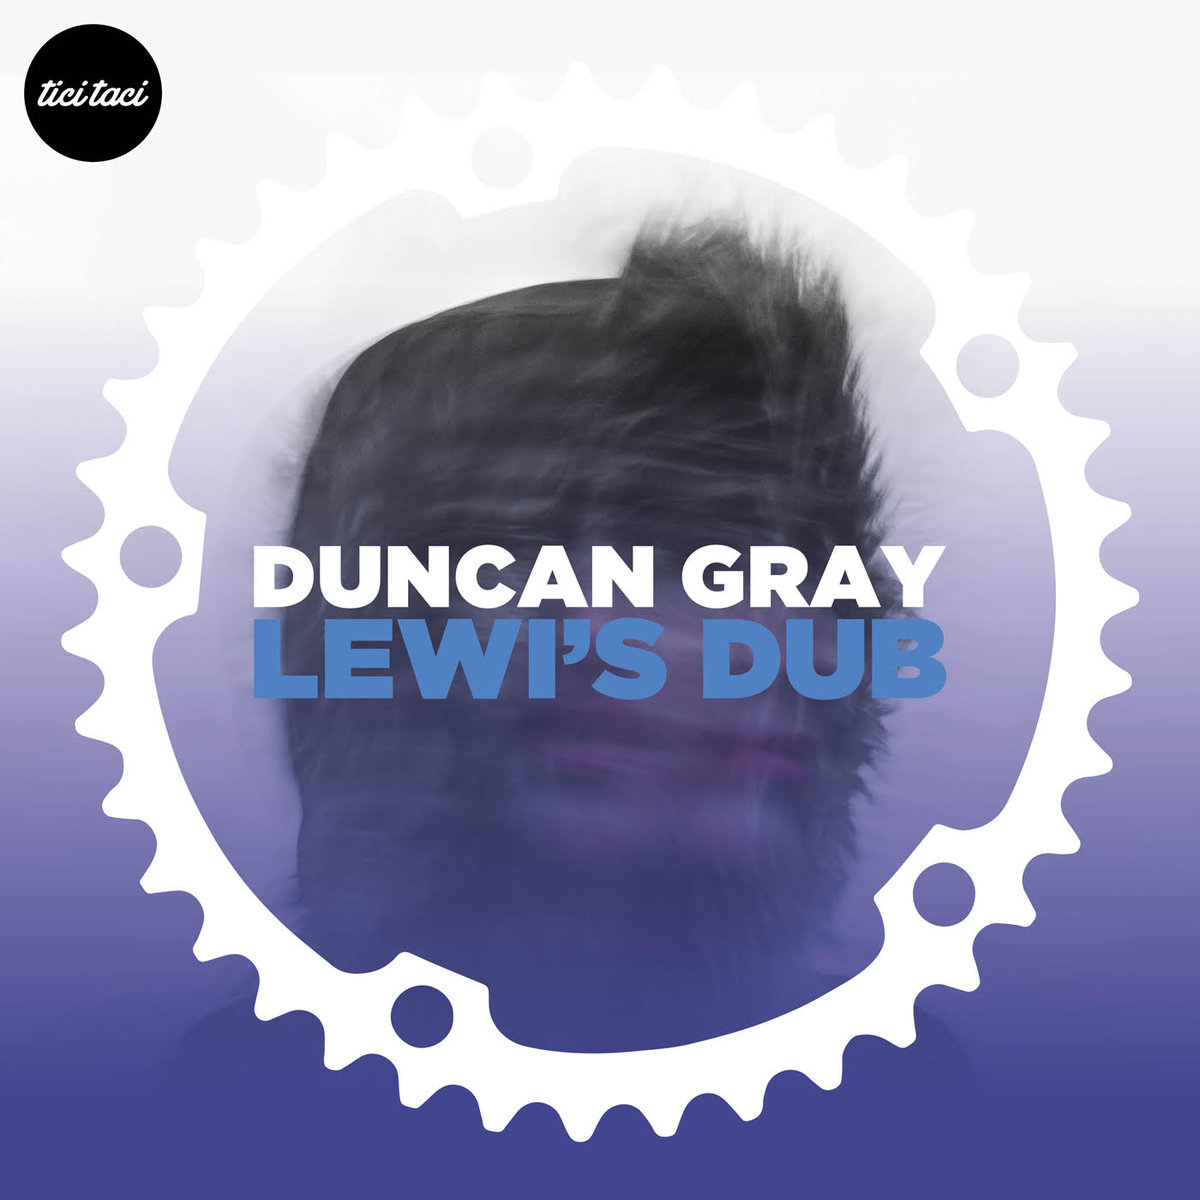 Duncan Gray - Lewi's Dub [2019-09-12] (tici taci)